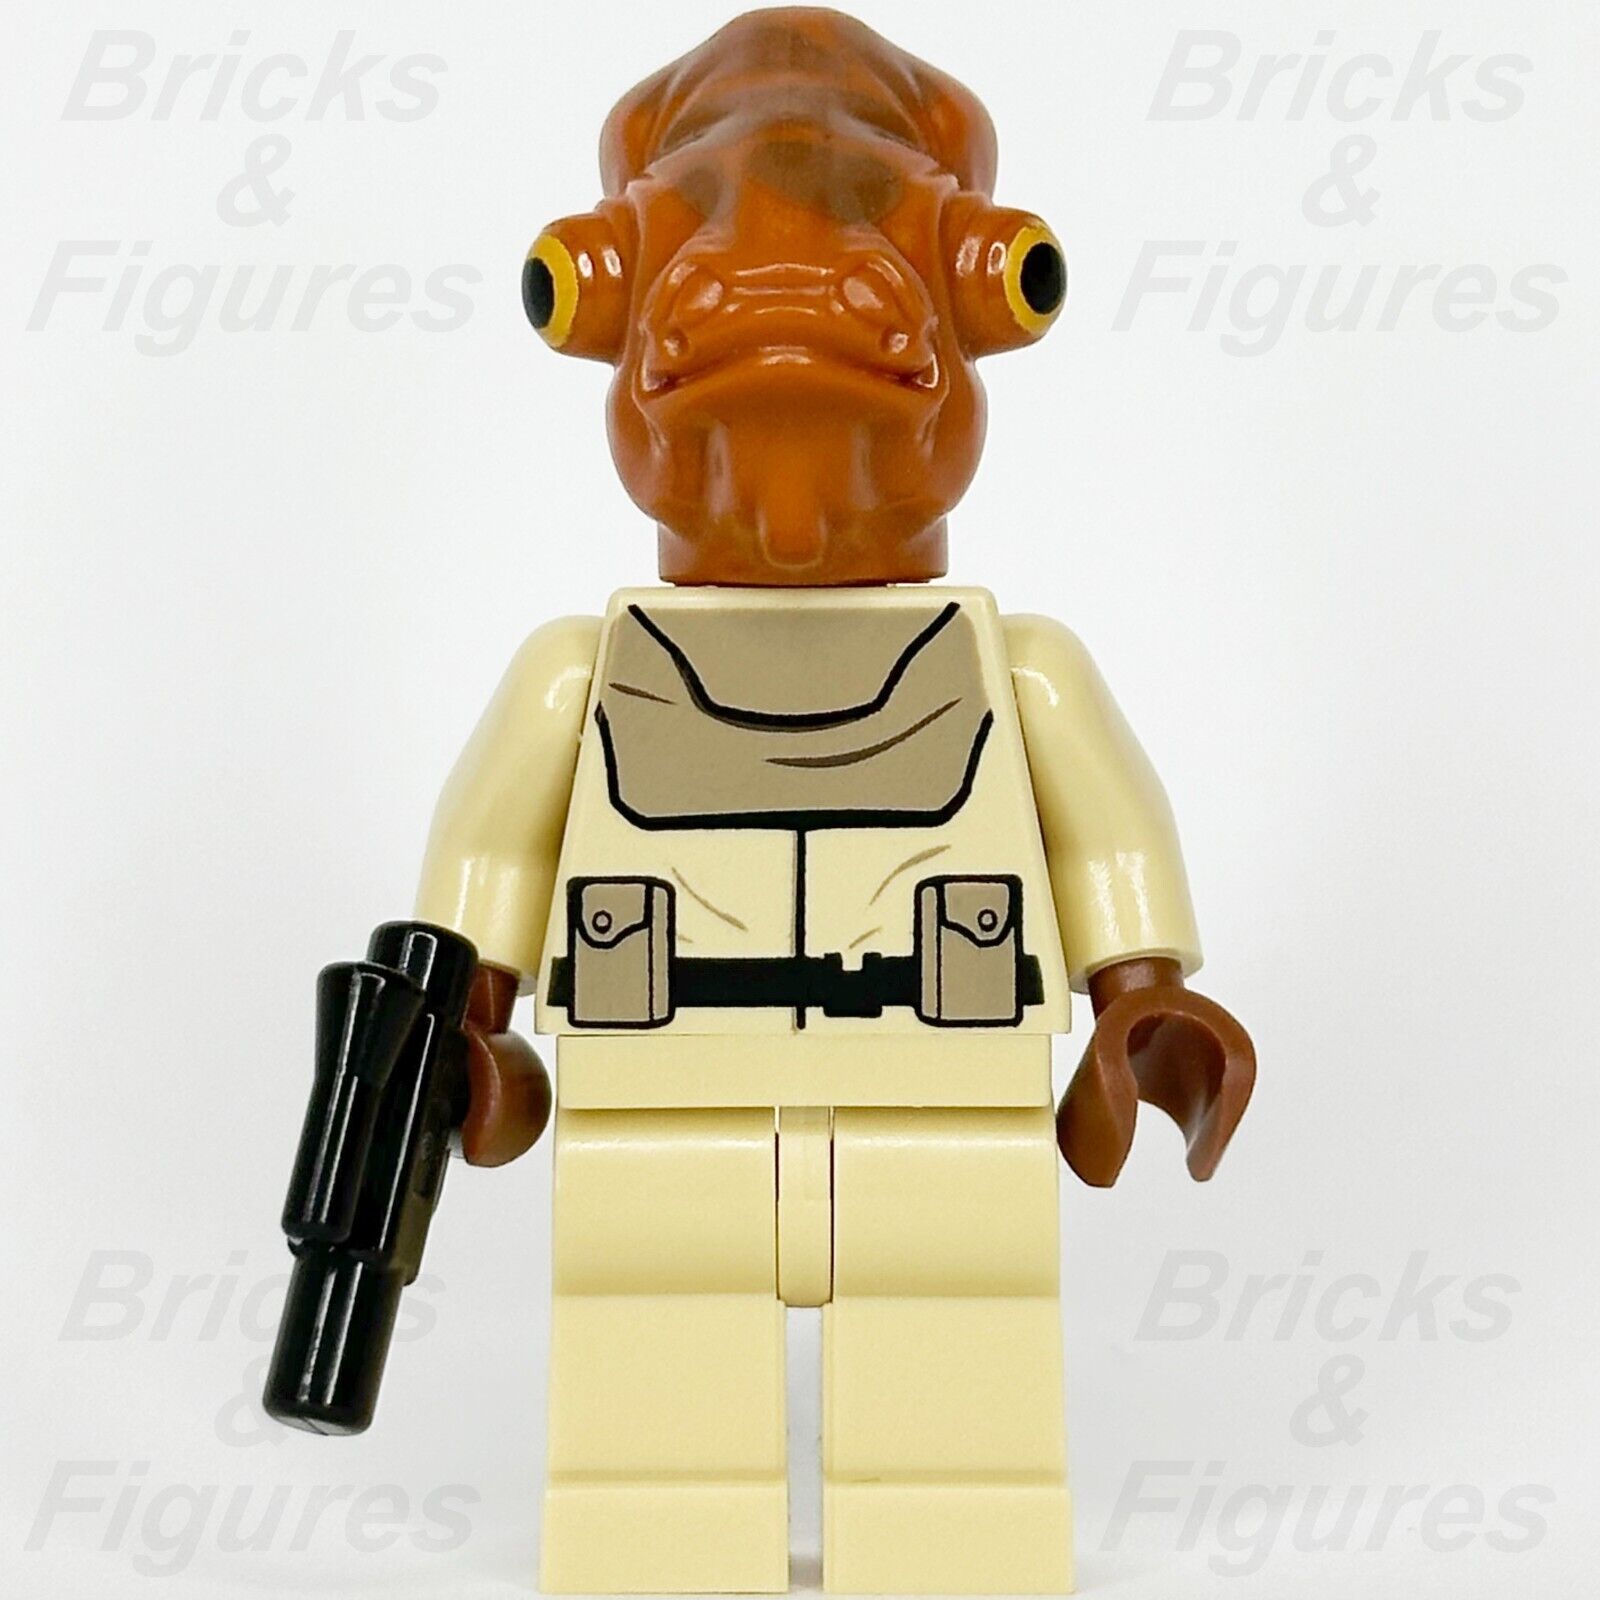 LEGO Star Wars Mon Calamari Officer Minifigure Rebel Alliance 7754 sw0248